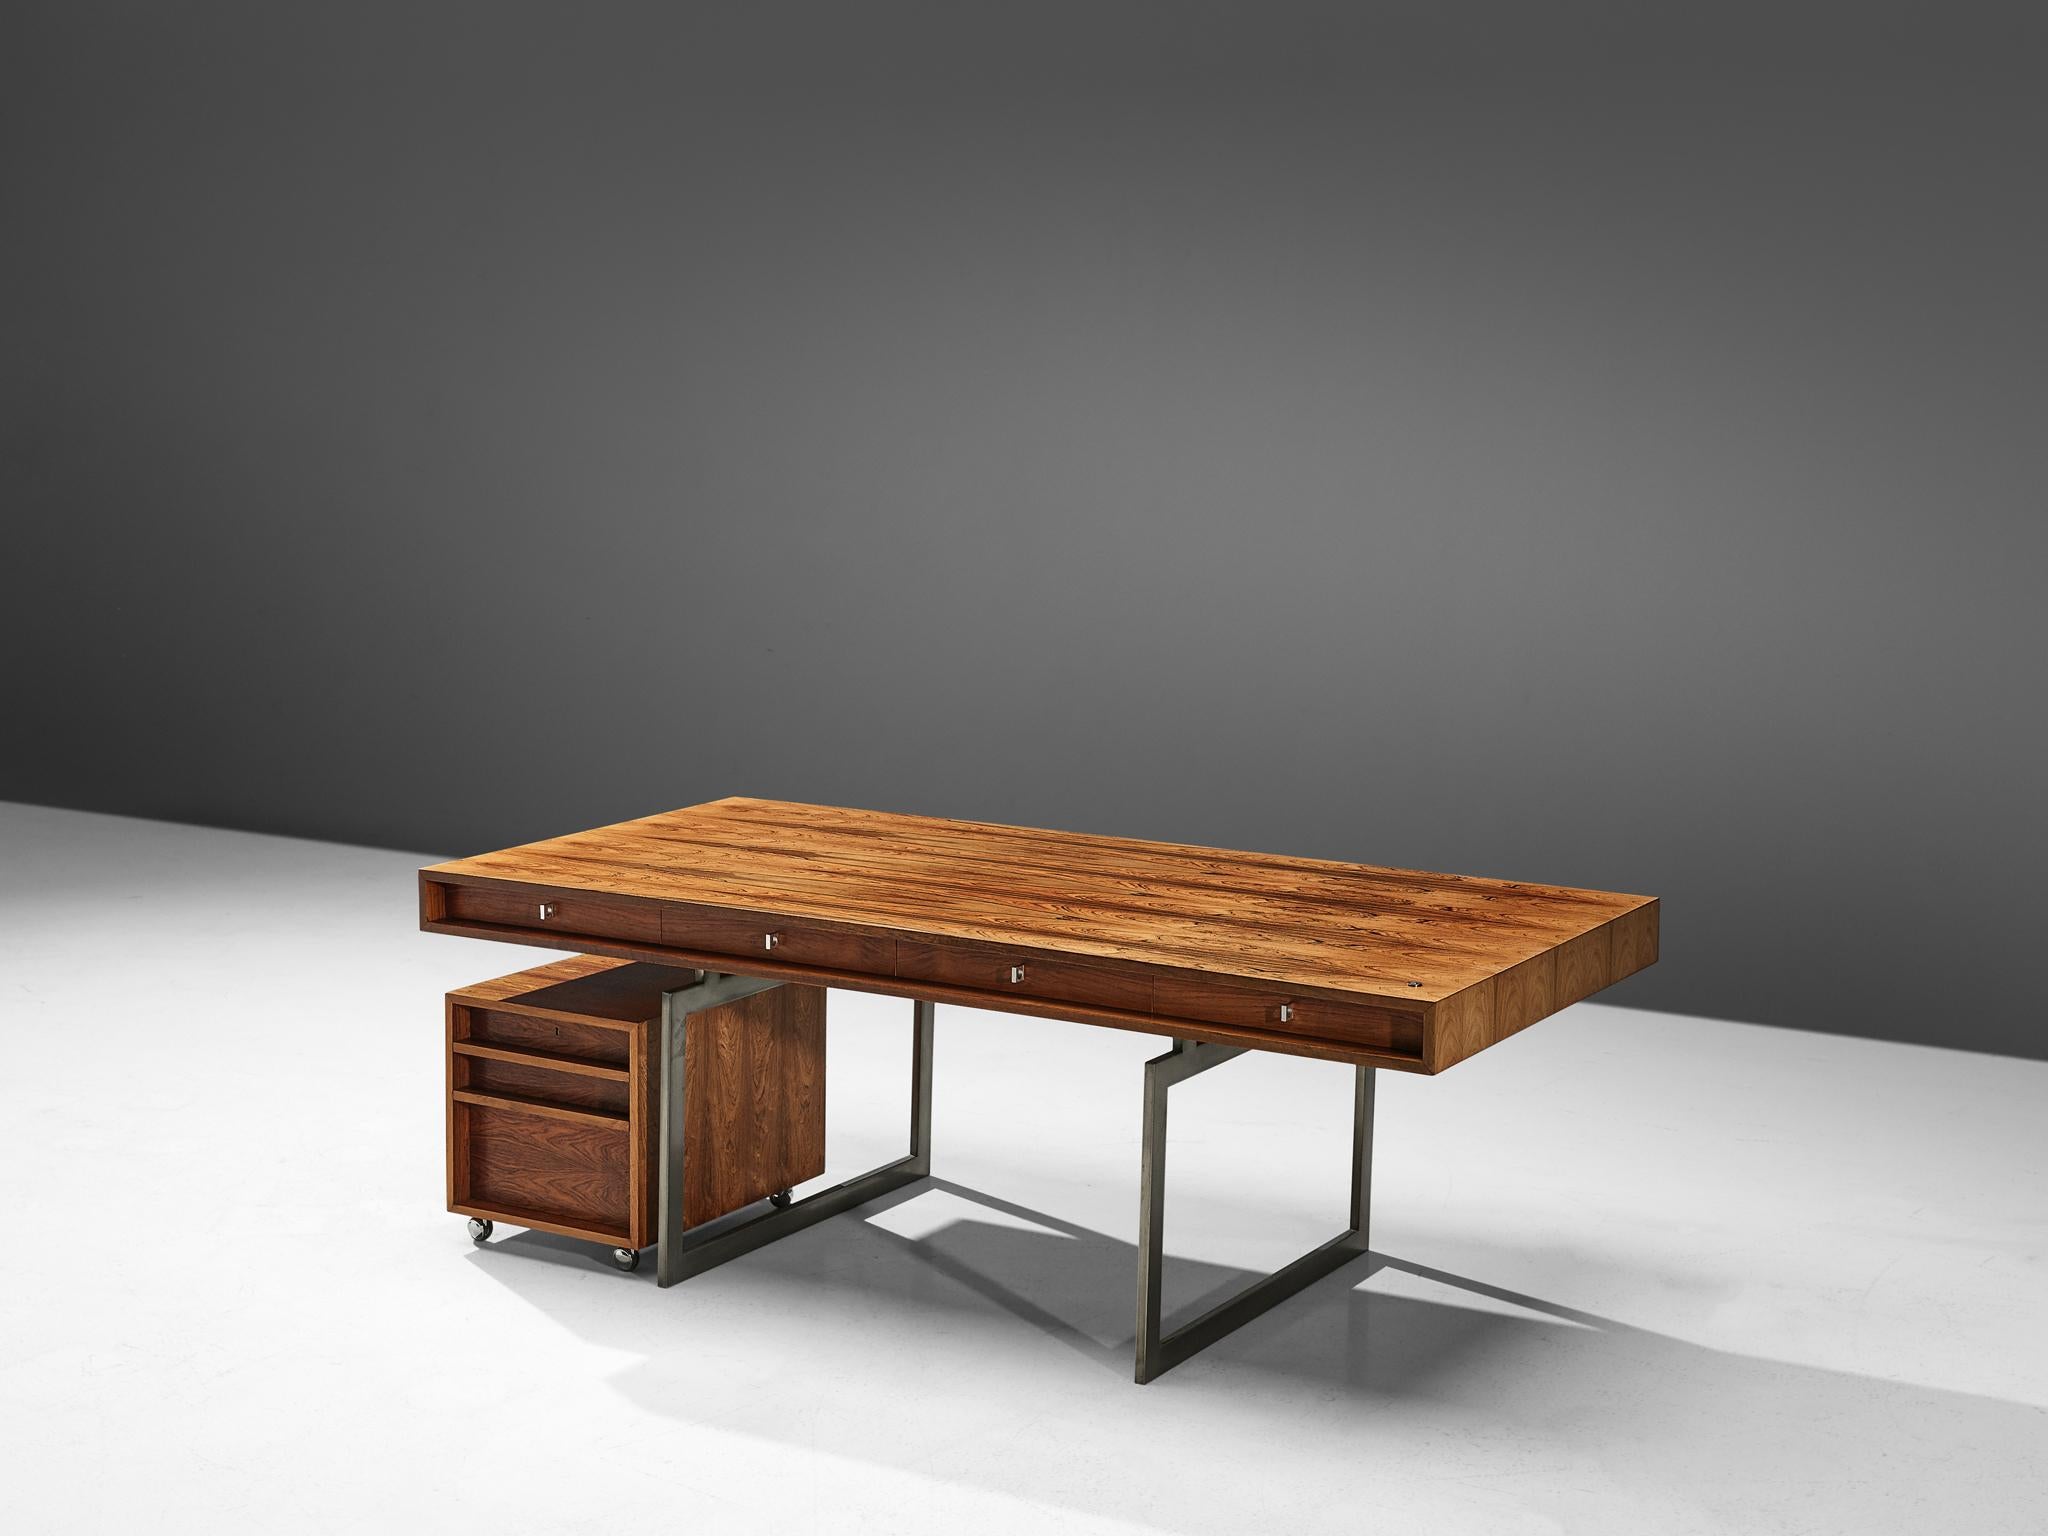 Bodil Kjaer for E. Pedersen & Søn, table model 901, rosewood and chrome steel, Denmark, 1959.

This freestanding desk in rosewood is designed by the Danish designer Bodil Kjaer. The desk can be used with multiple purposes, as a writing table, desk